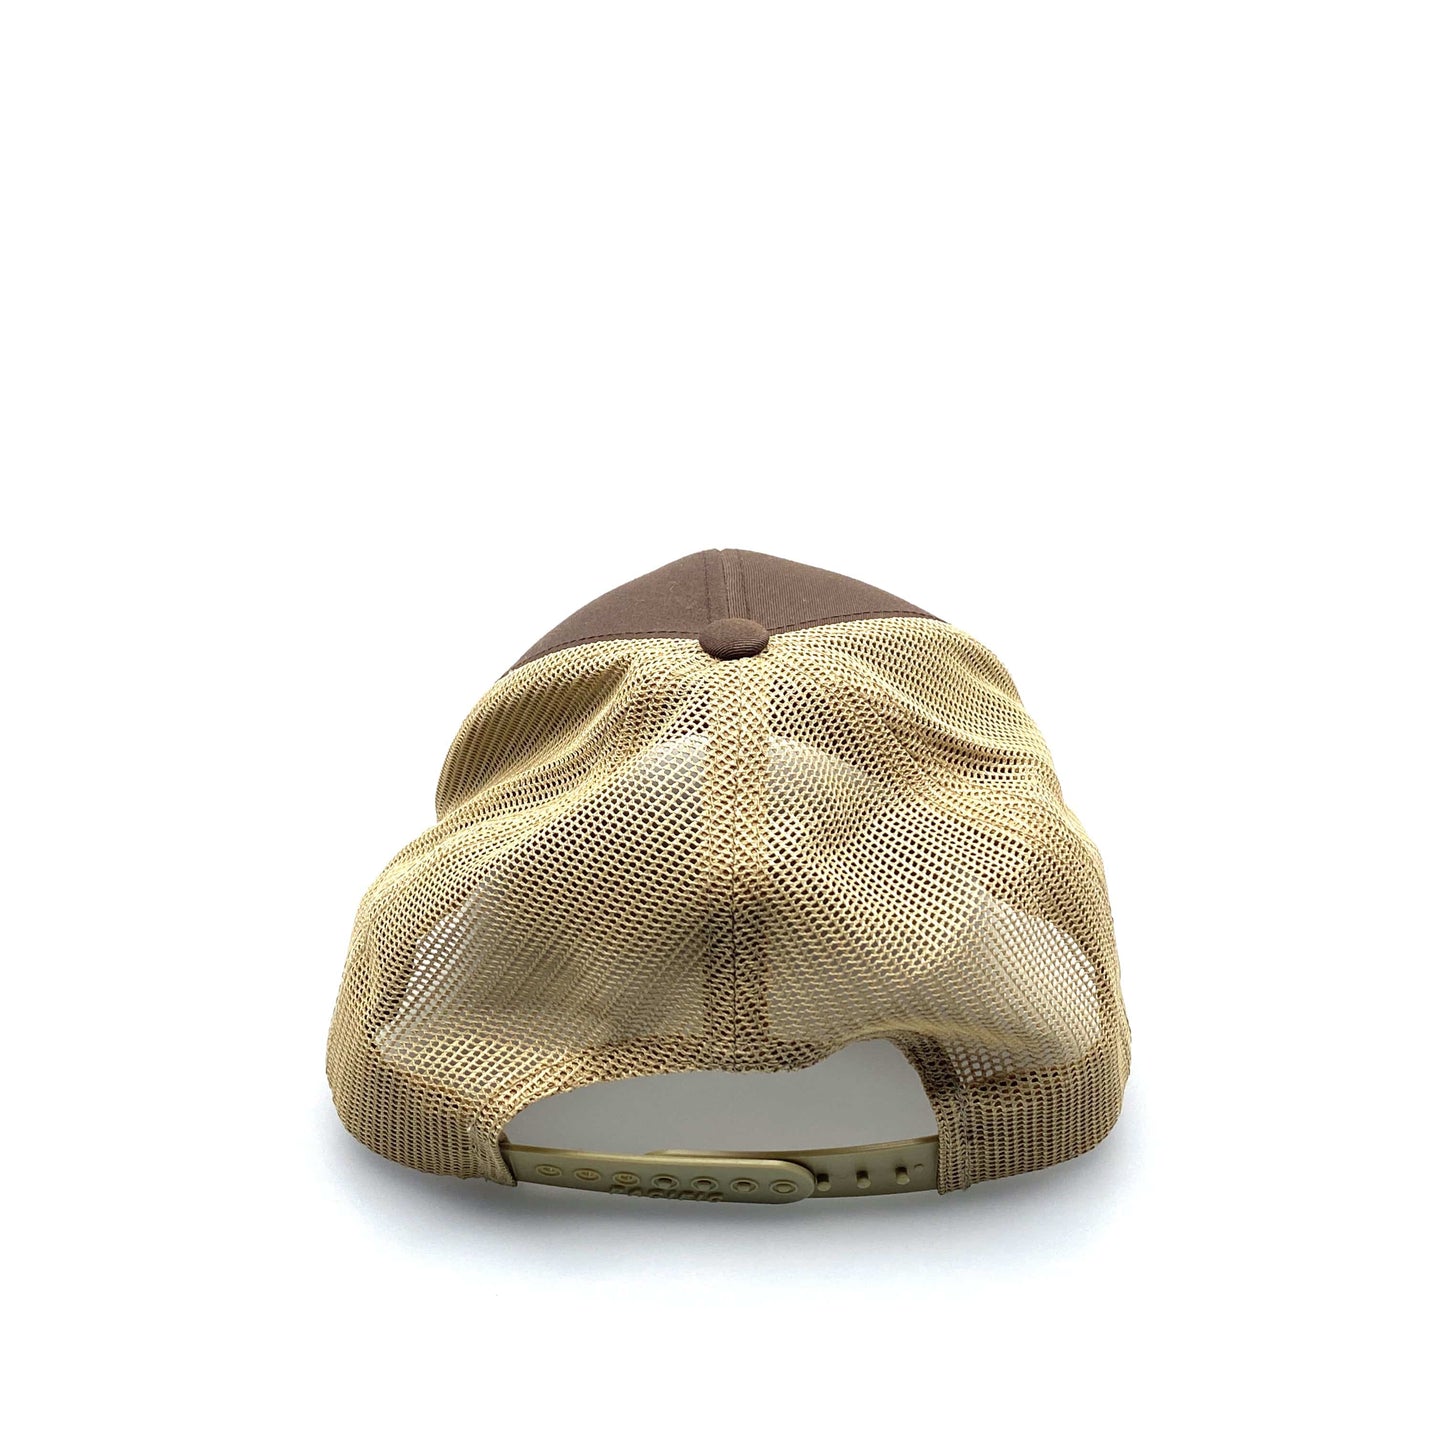 Pacific Headwear L-H Manufacturing Mens Trucker Hat SnapBack OS Brown Beige Baseball Cap